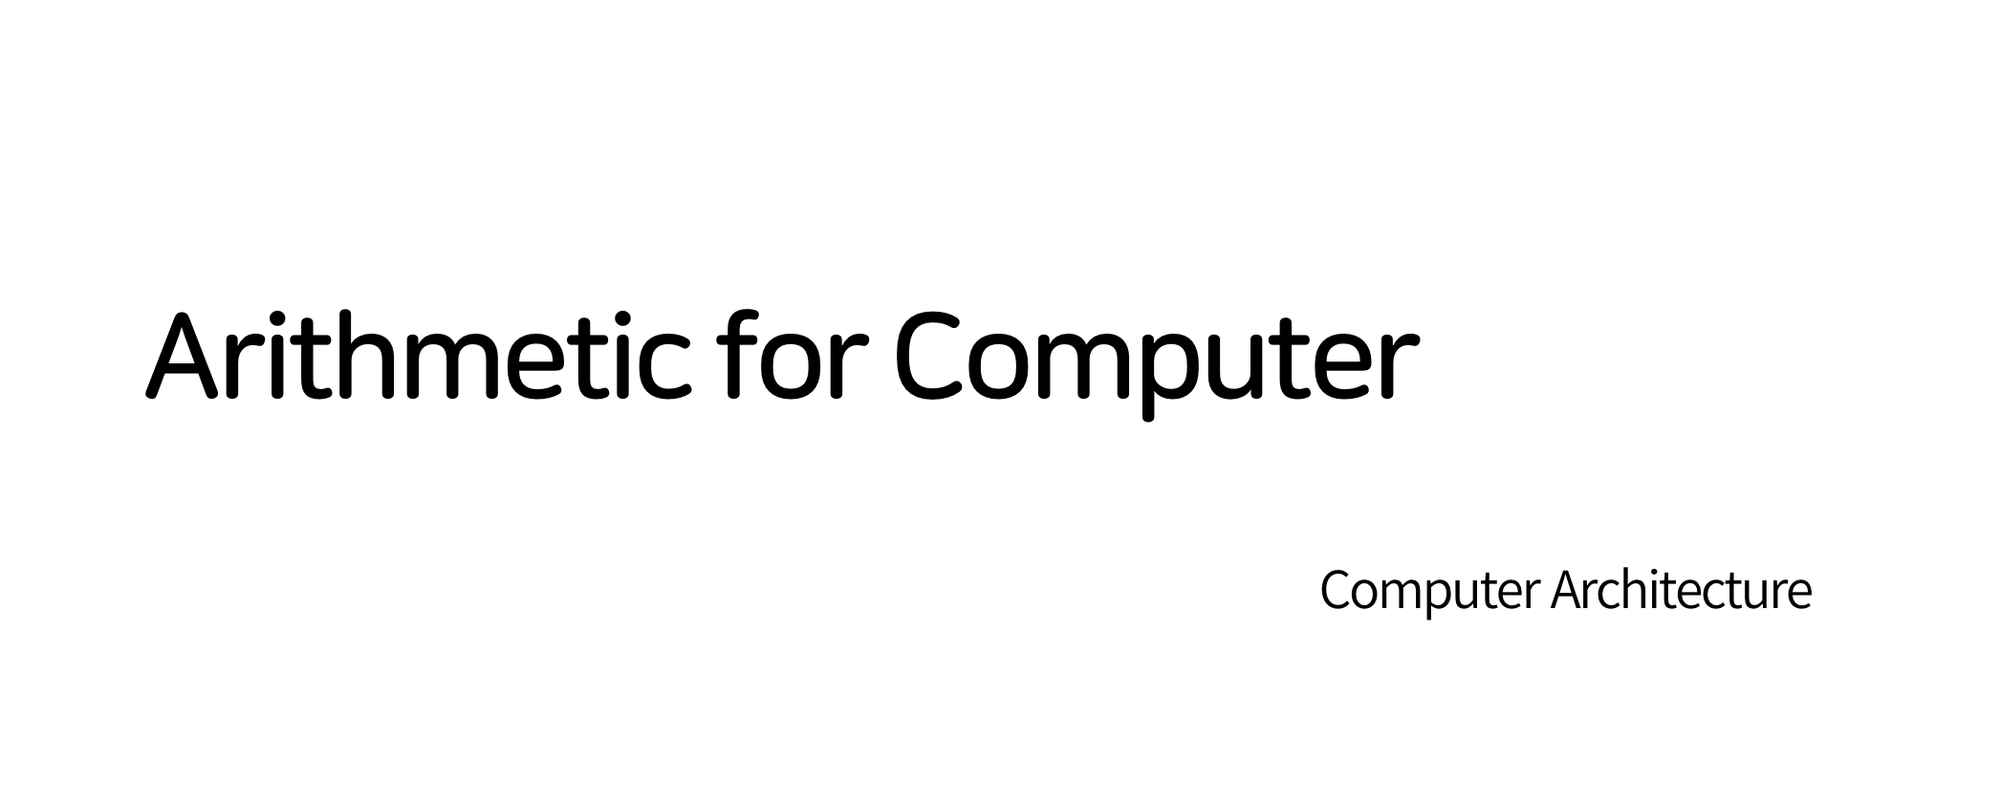 Arithmetic for Computer- Computer Architecture